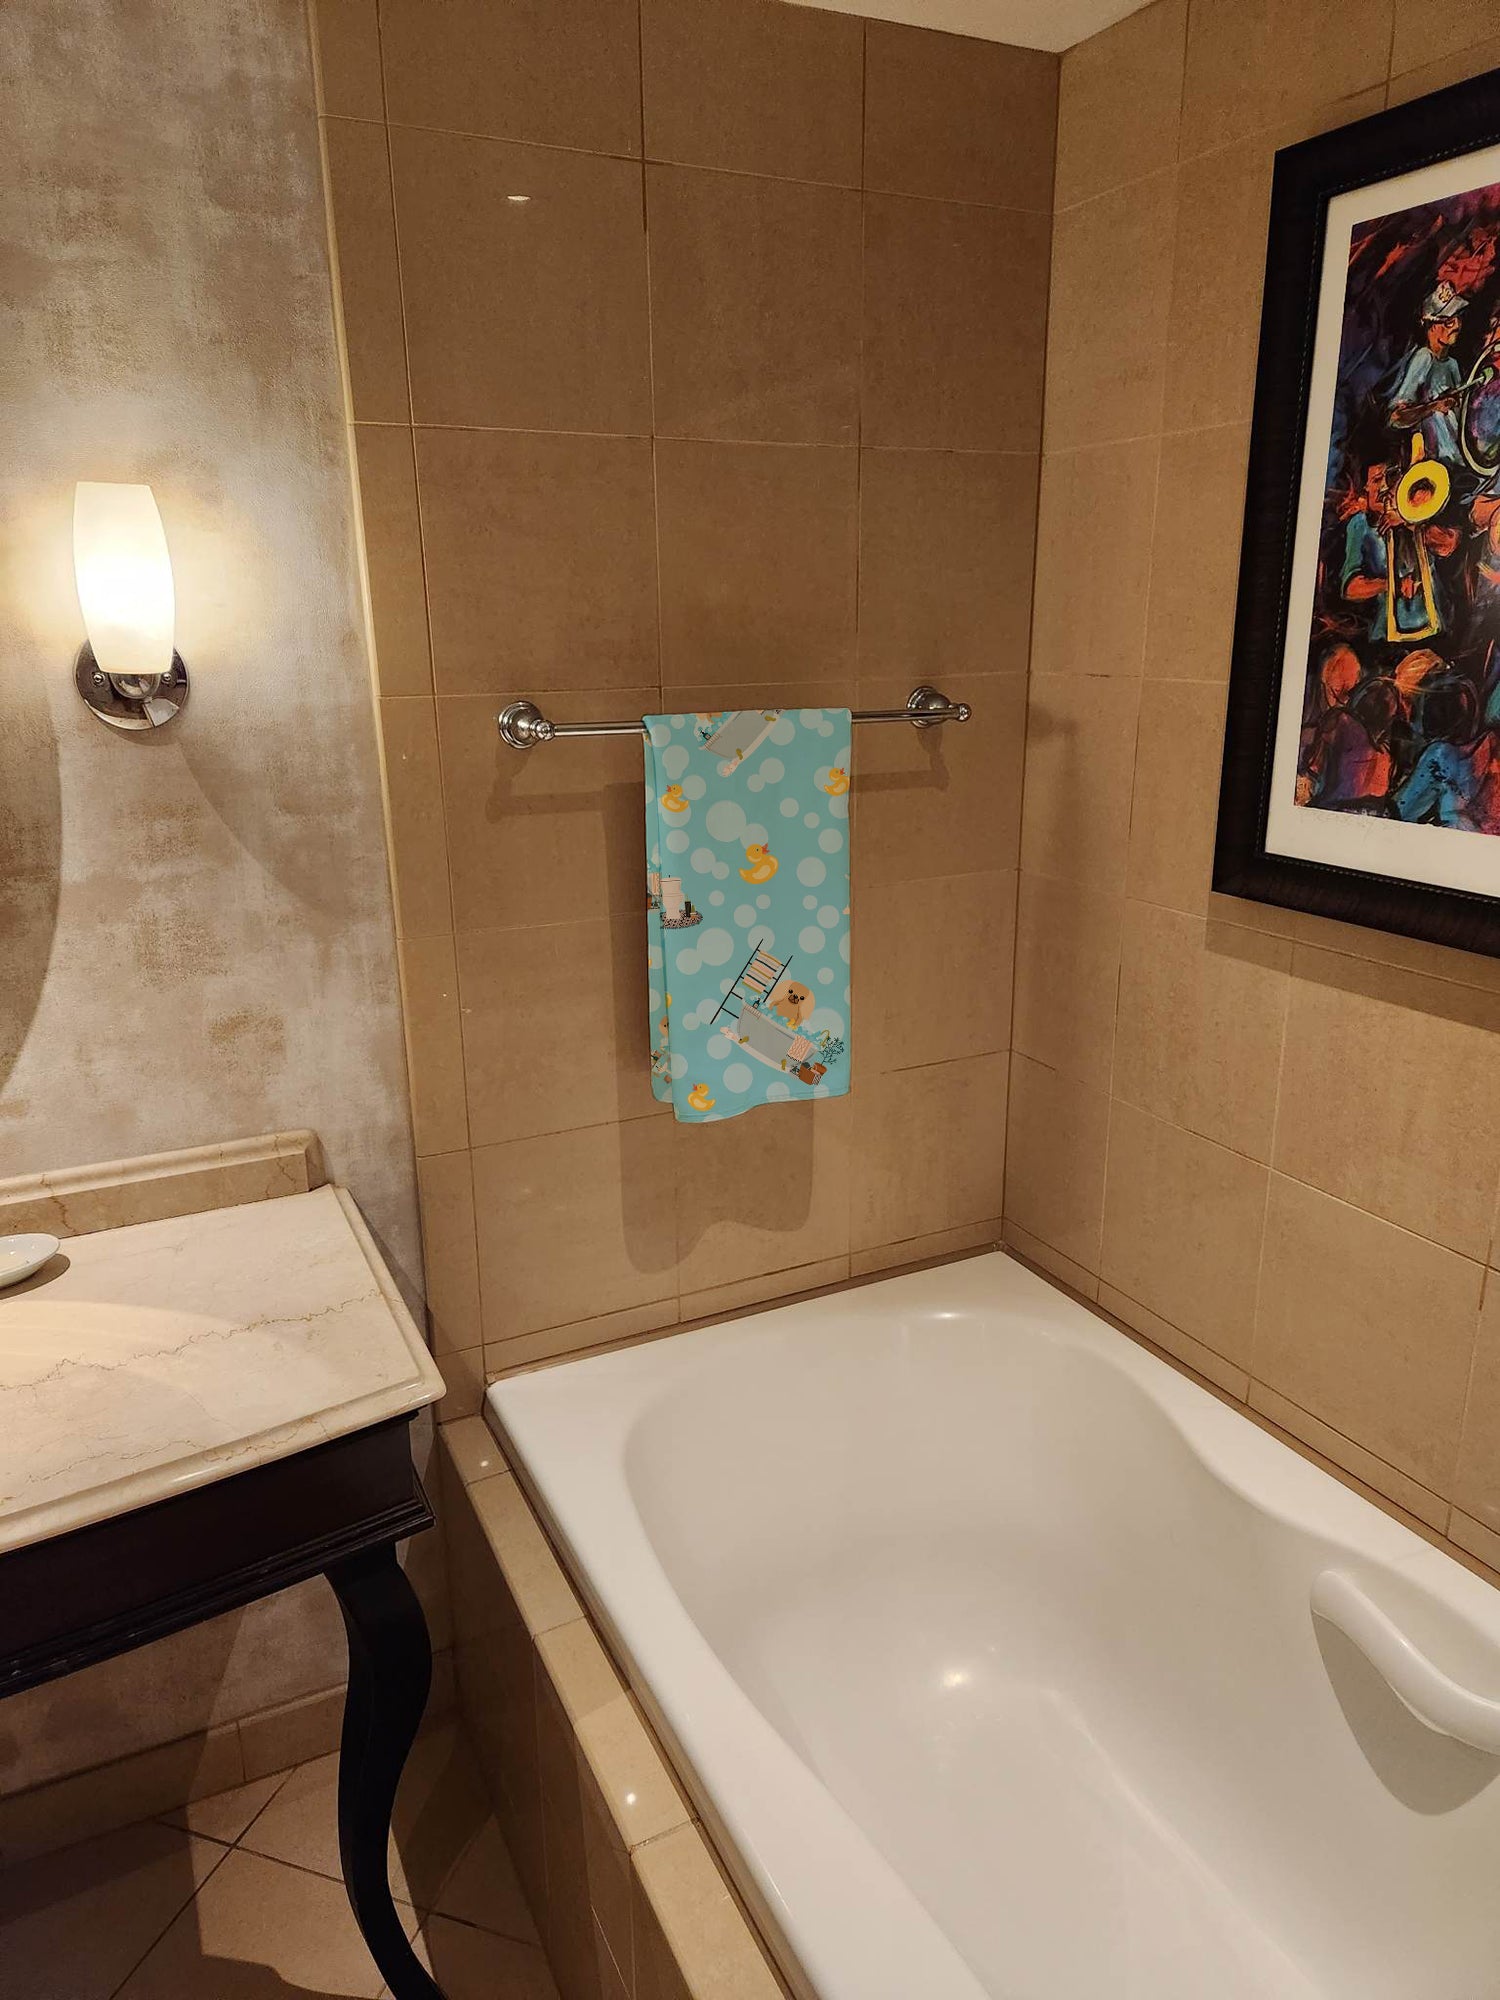 Fawn Sable Pekingese in Bathtub Bath Towel Large